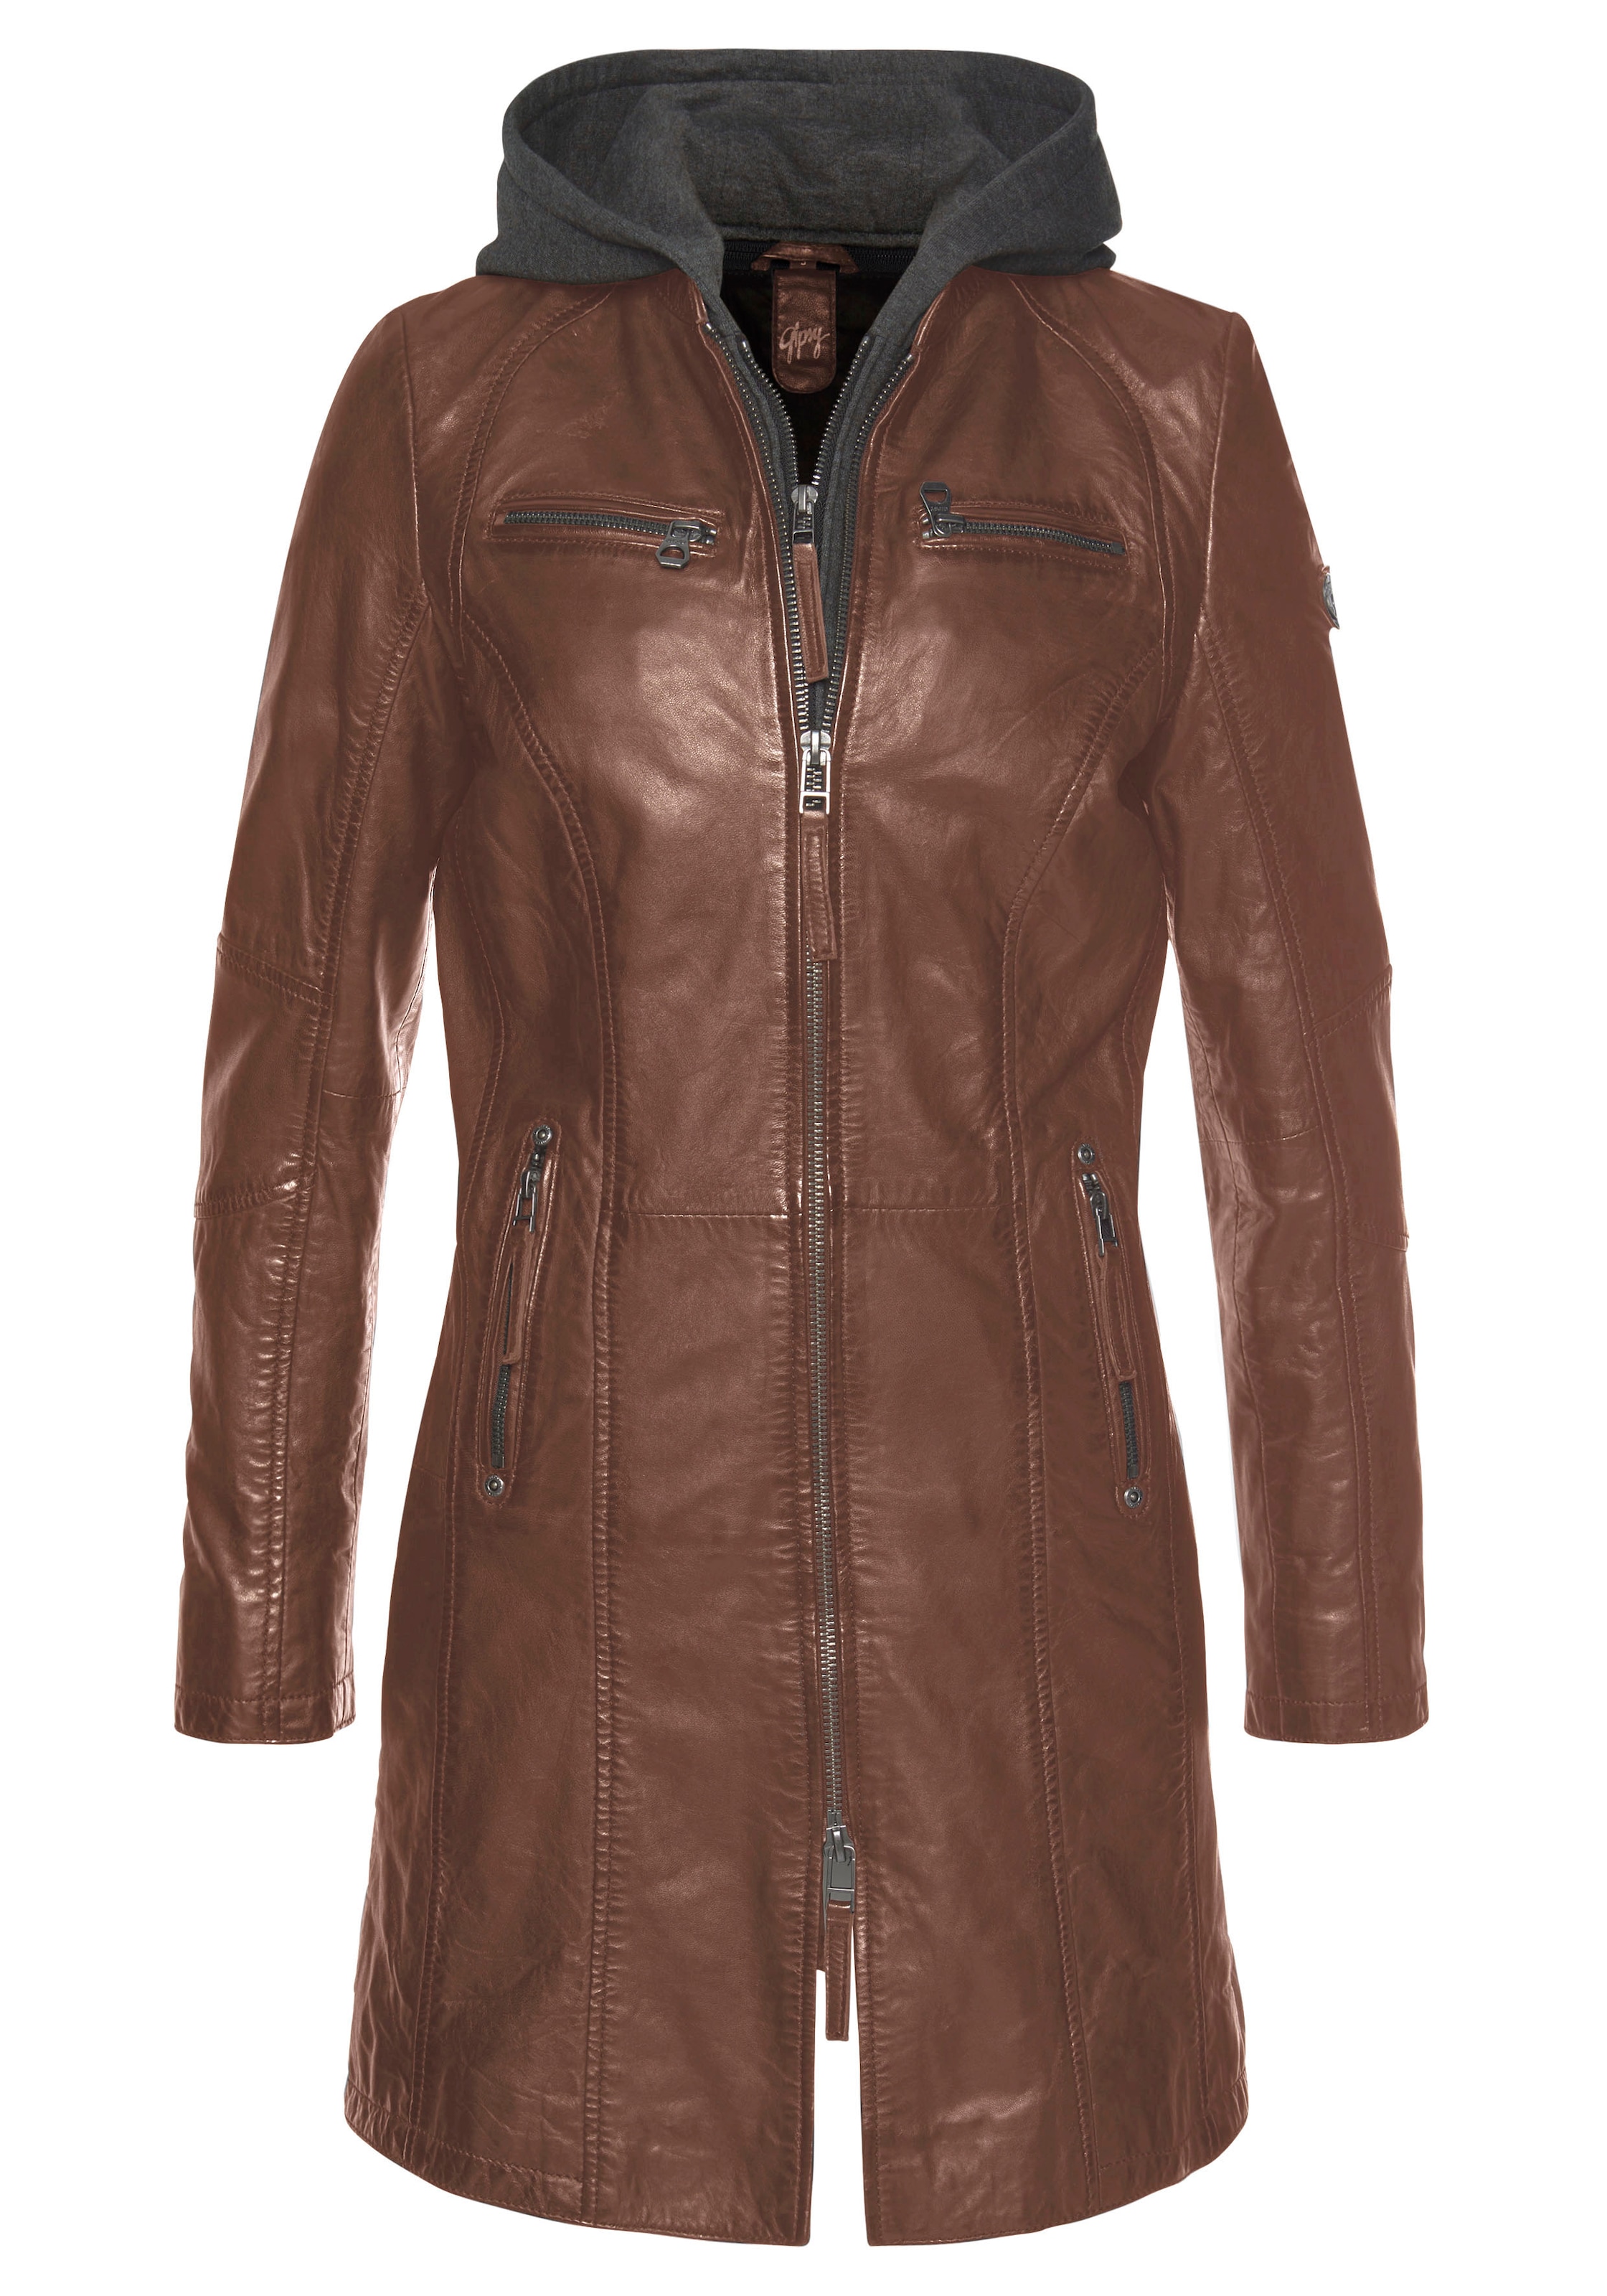 Gipsy Ledermantel »Bente«, 2-in-1-Lederjacke mit abnehmbarem Jerseyqualität kaufen online Kapuzen-Inlay aus